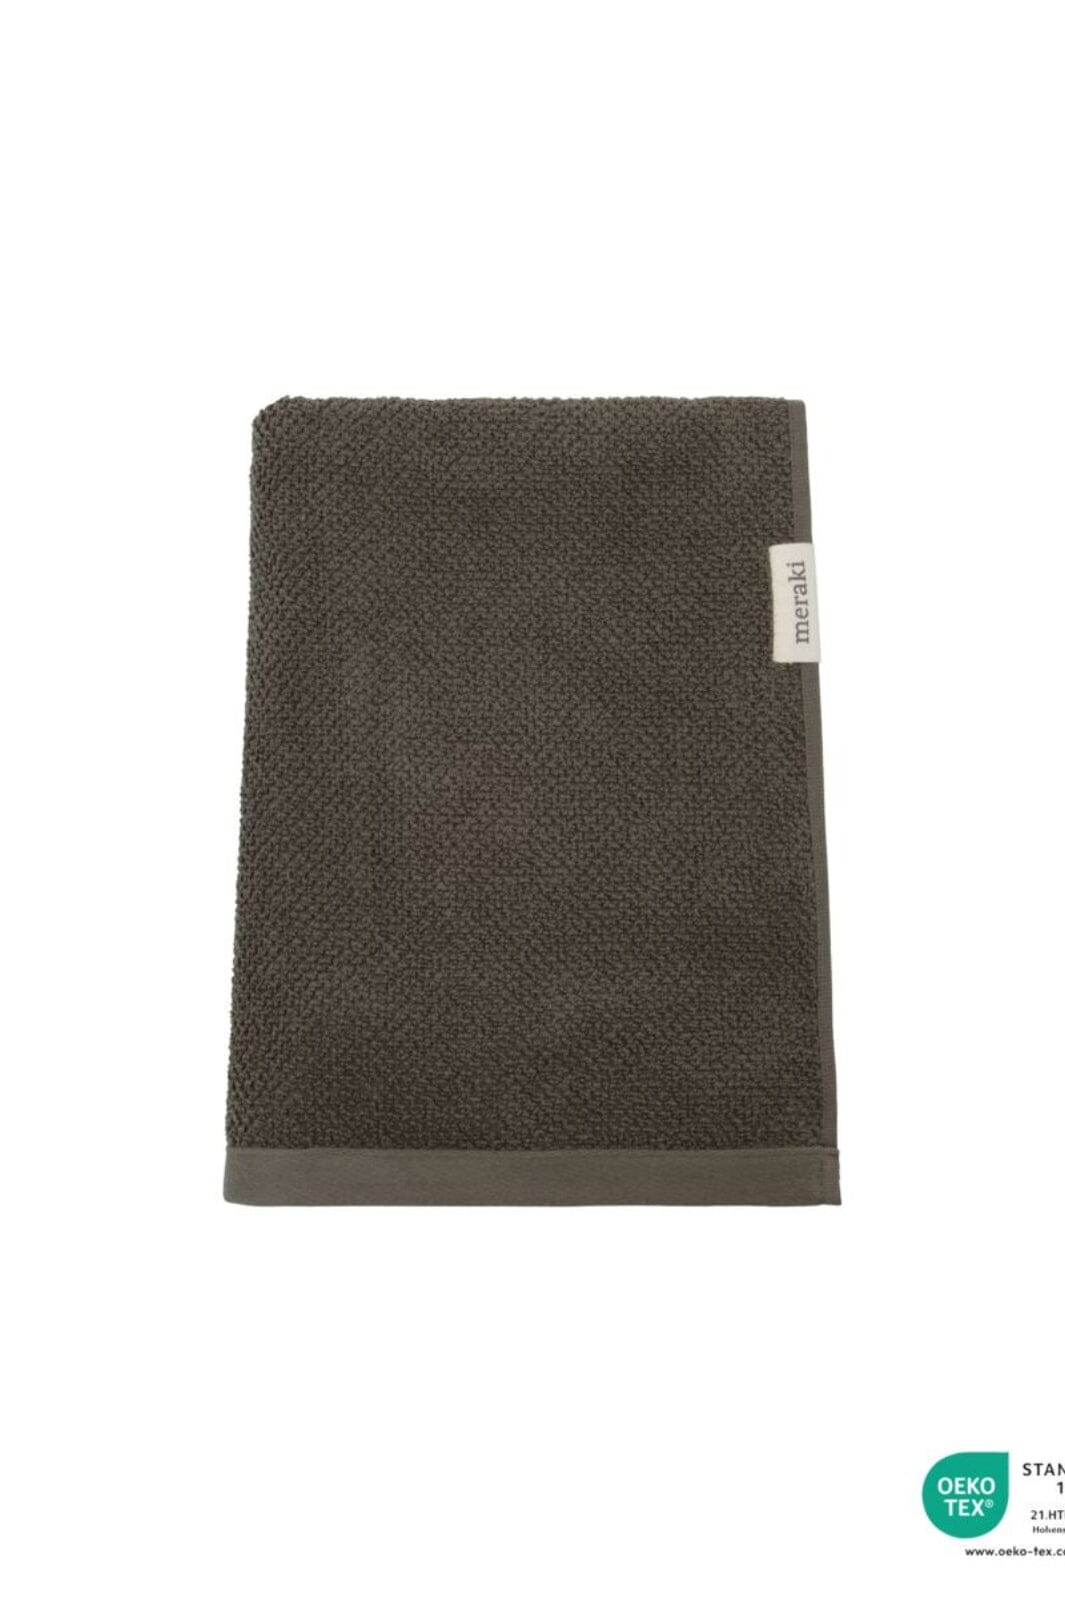 Meraki - Håndklæde, Solid, 70 x 140, Army Håndklæder 